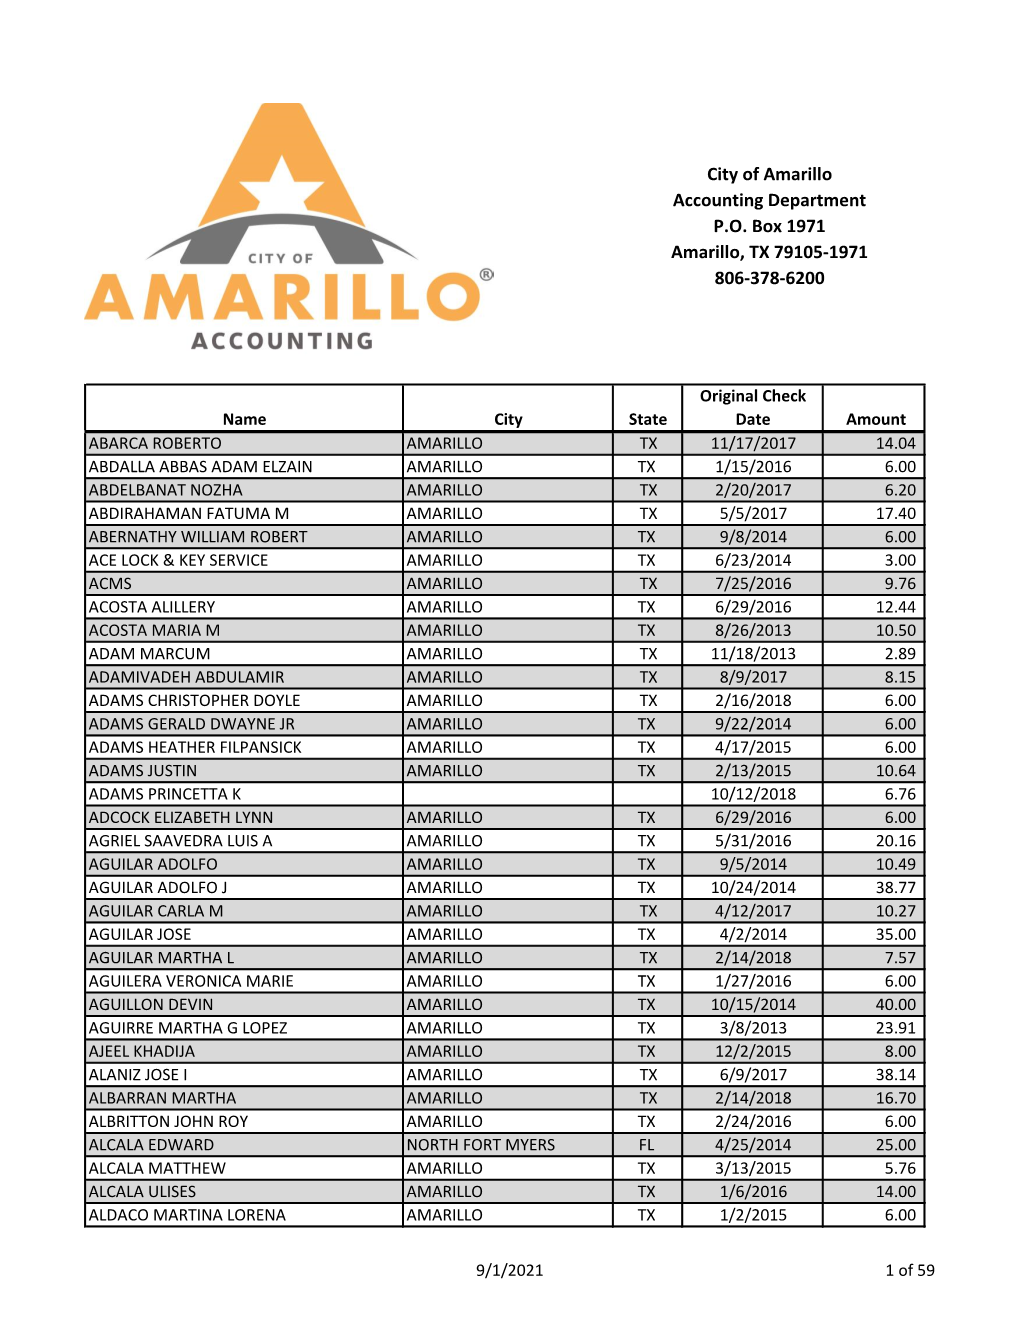 City of Amarillo Accounting Department P.O. Box 1971 Amarillo, TX 79105-1971 806-378-6200